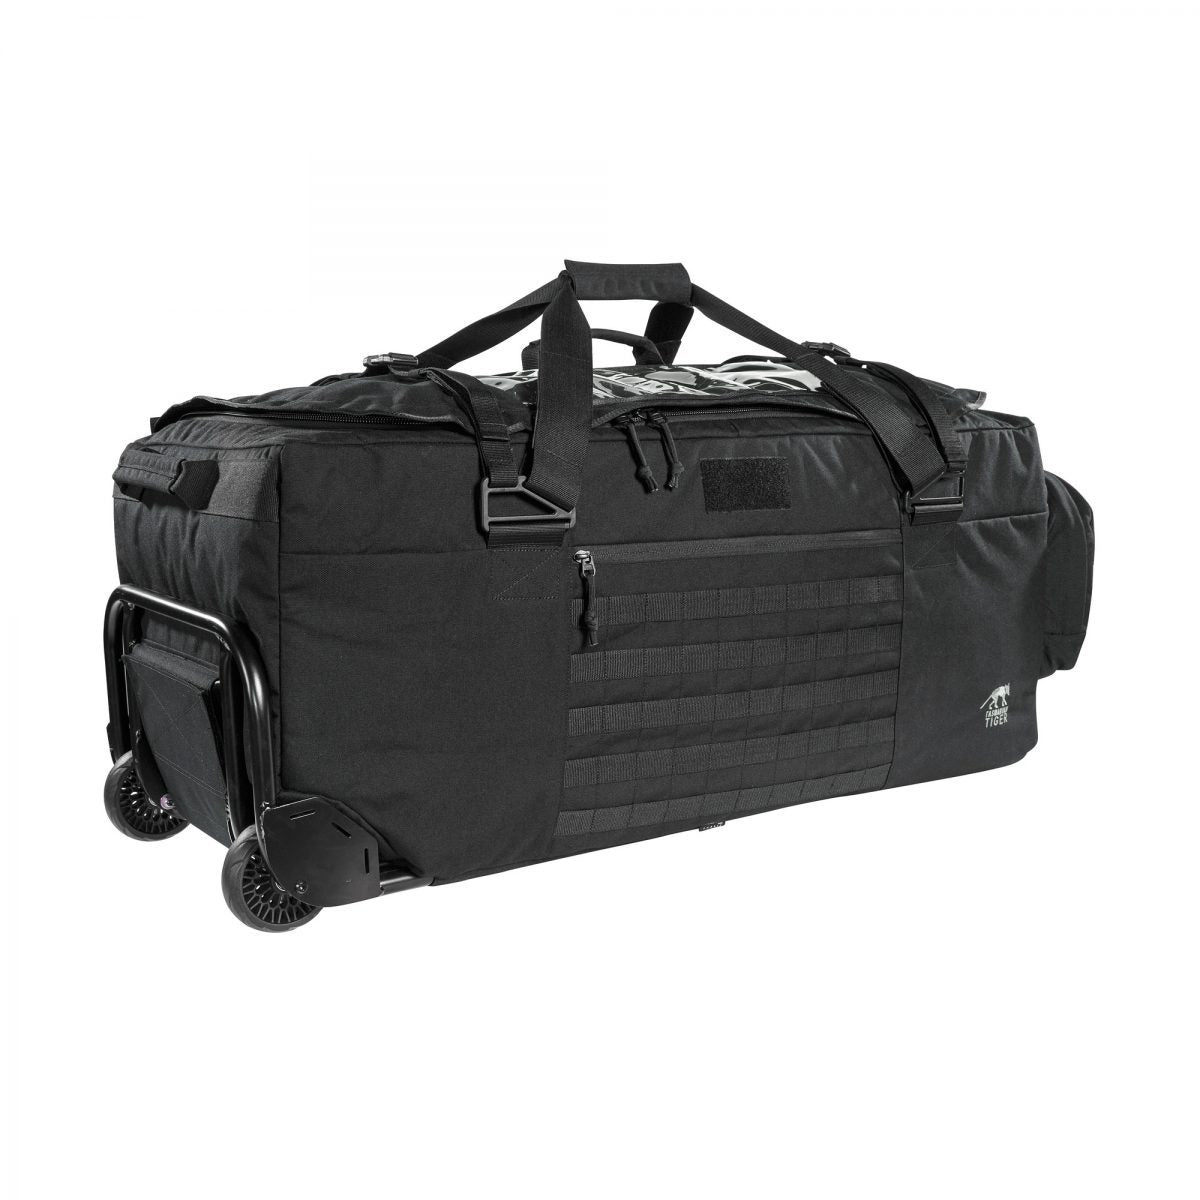 Tasmanian Tiger Mil Transporter Black 190L Bag Bags, Packs and Cases Tasmanian Tiger Tactical Gear Supplier Tactical Distributors Australia